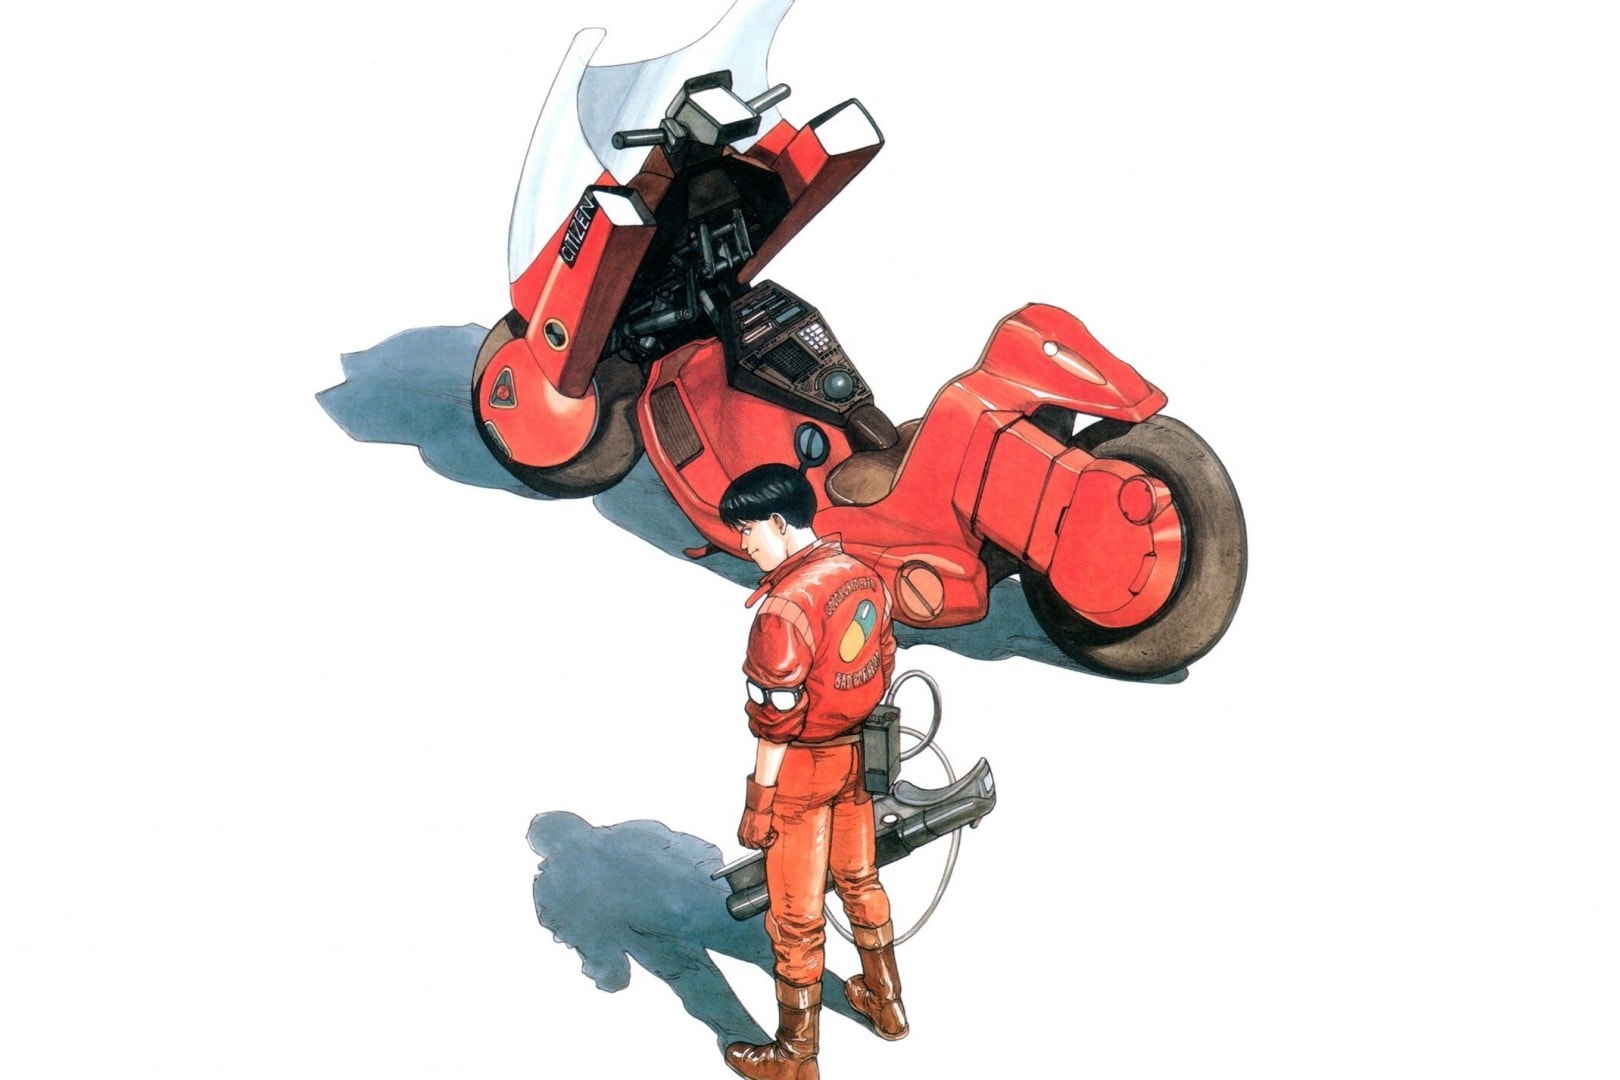 AKIRAの作者 大友克洋が語った金田の赤いバイクのデザインソースとは